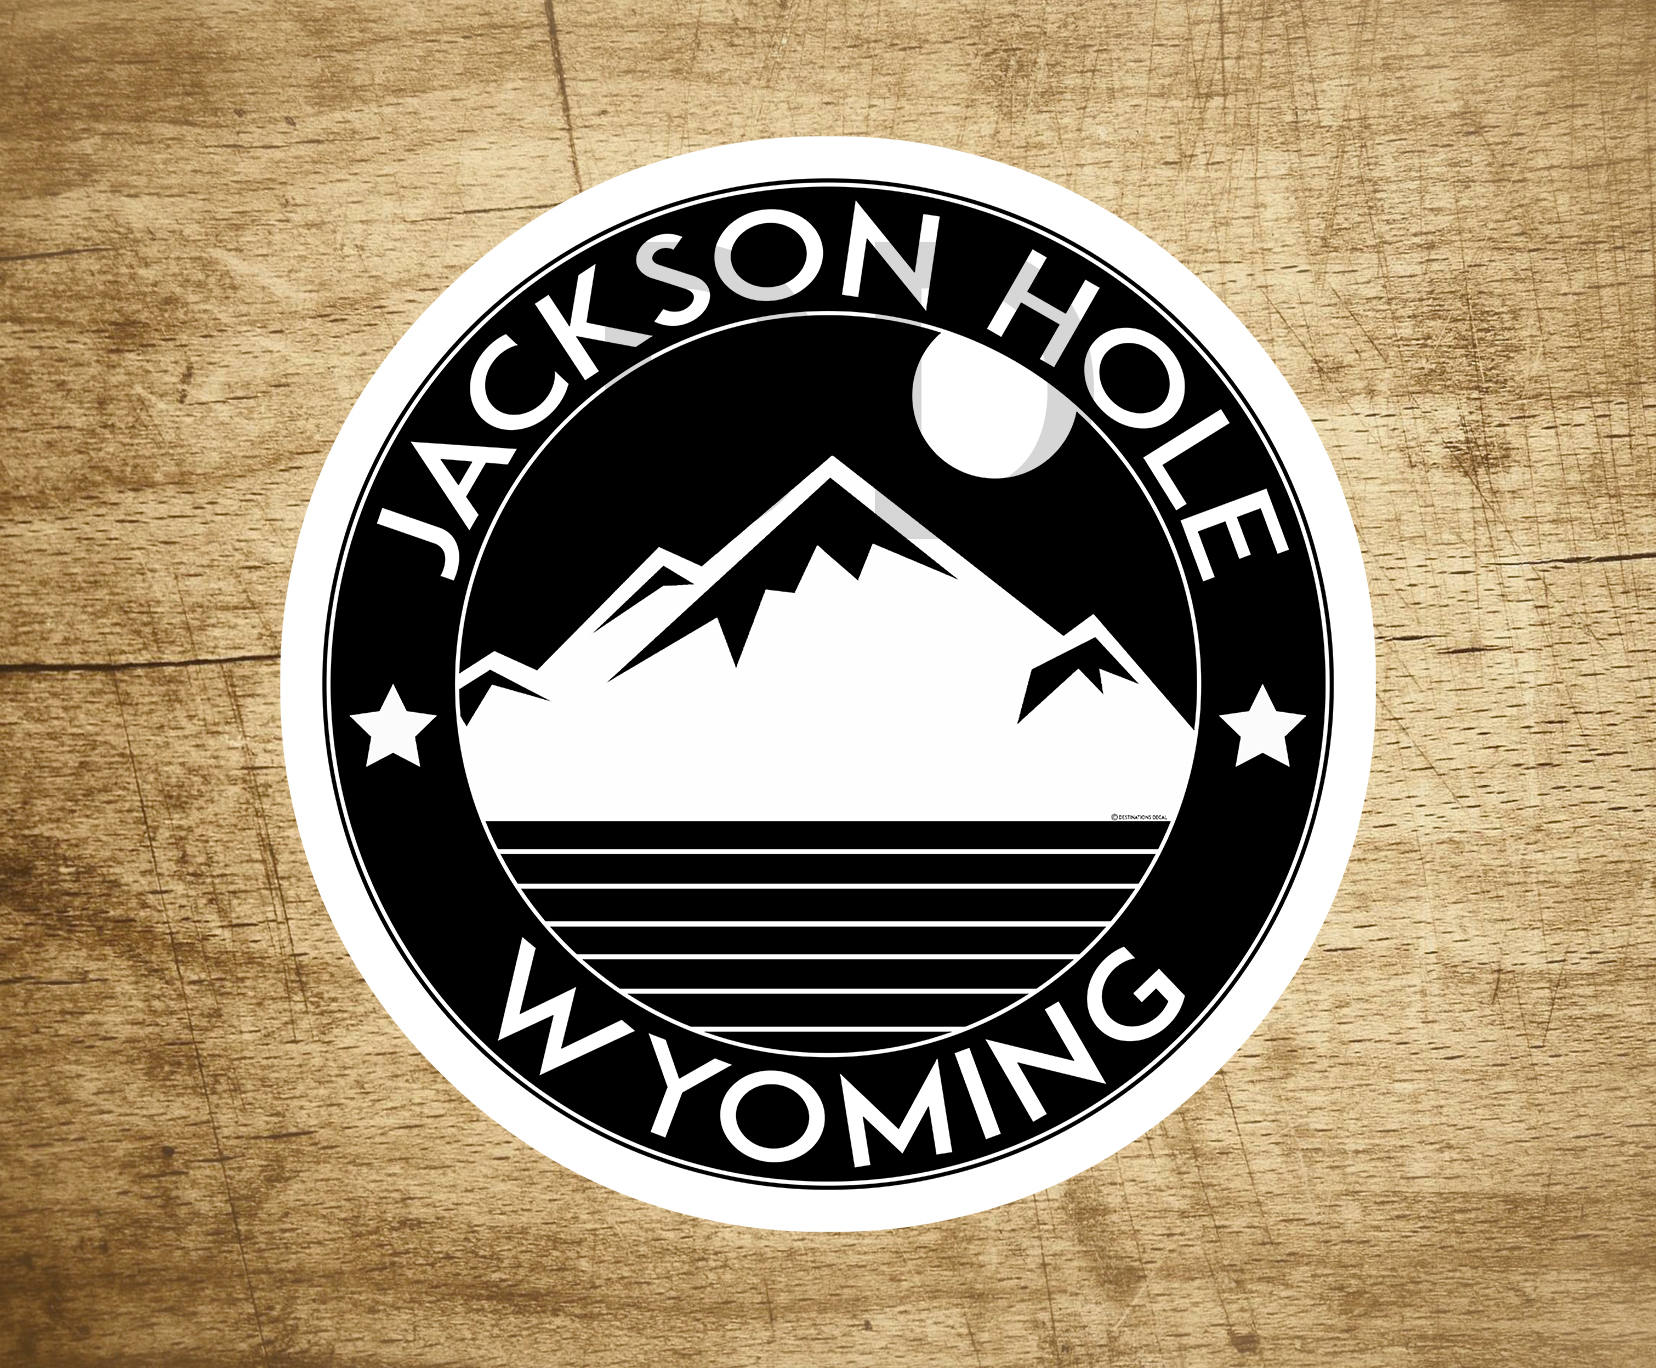 Skiing Jackson Hole Wyoming Sticker Decal Hike Ski Snowboard Mountain Bike Vinyl 3.5" x 3.5"